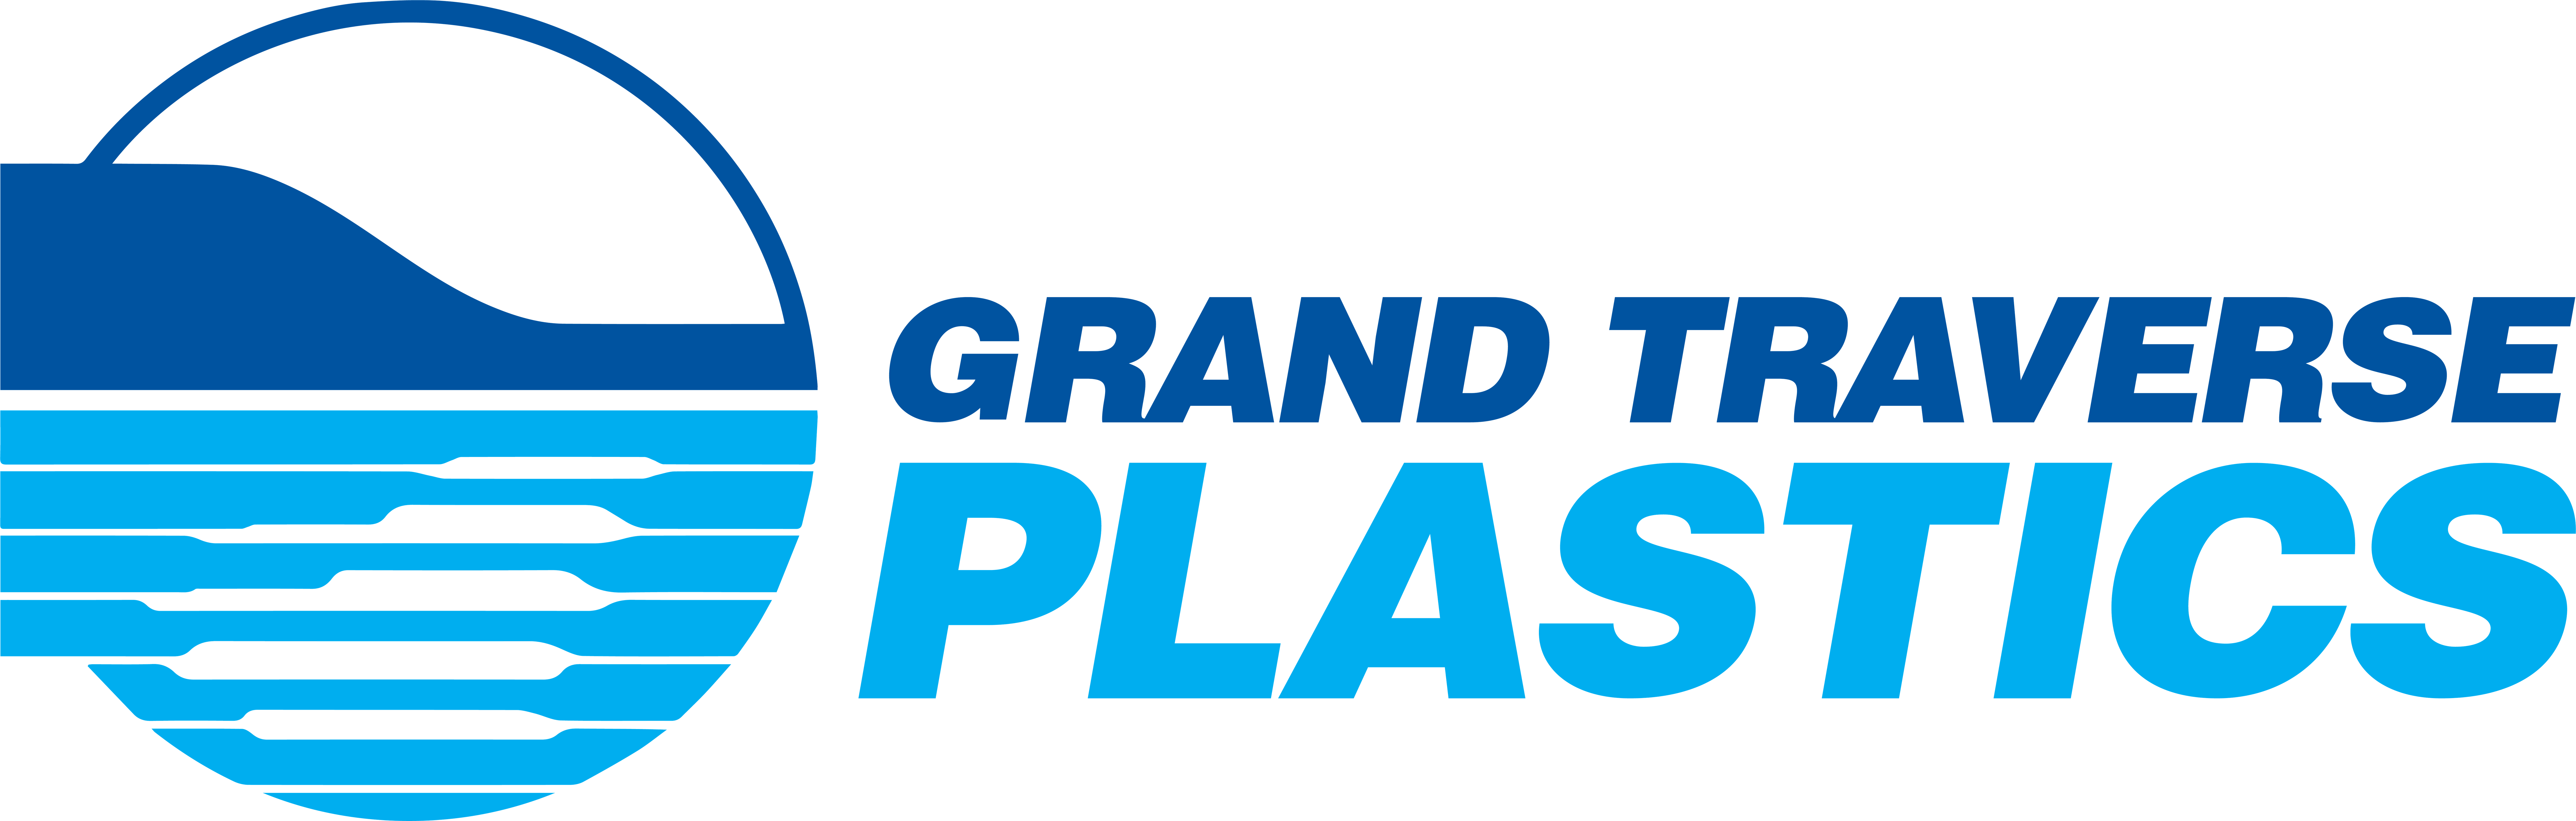 Functional Plastics - Grand Traverse